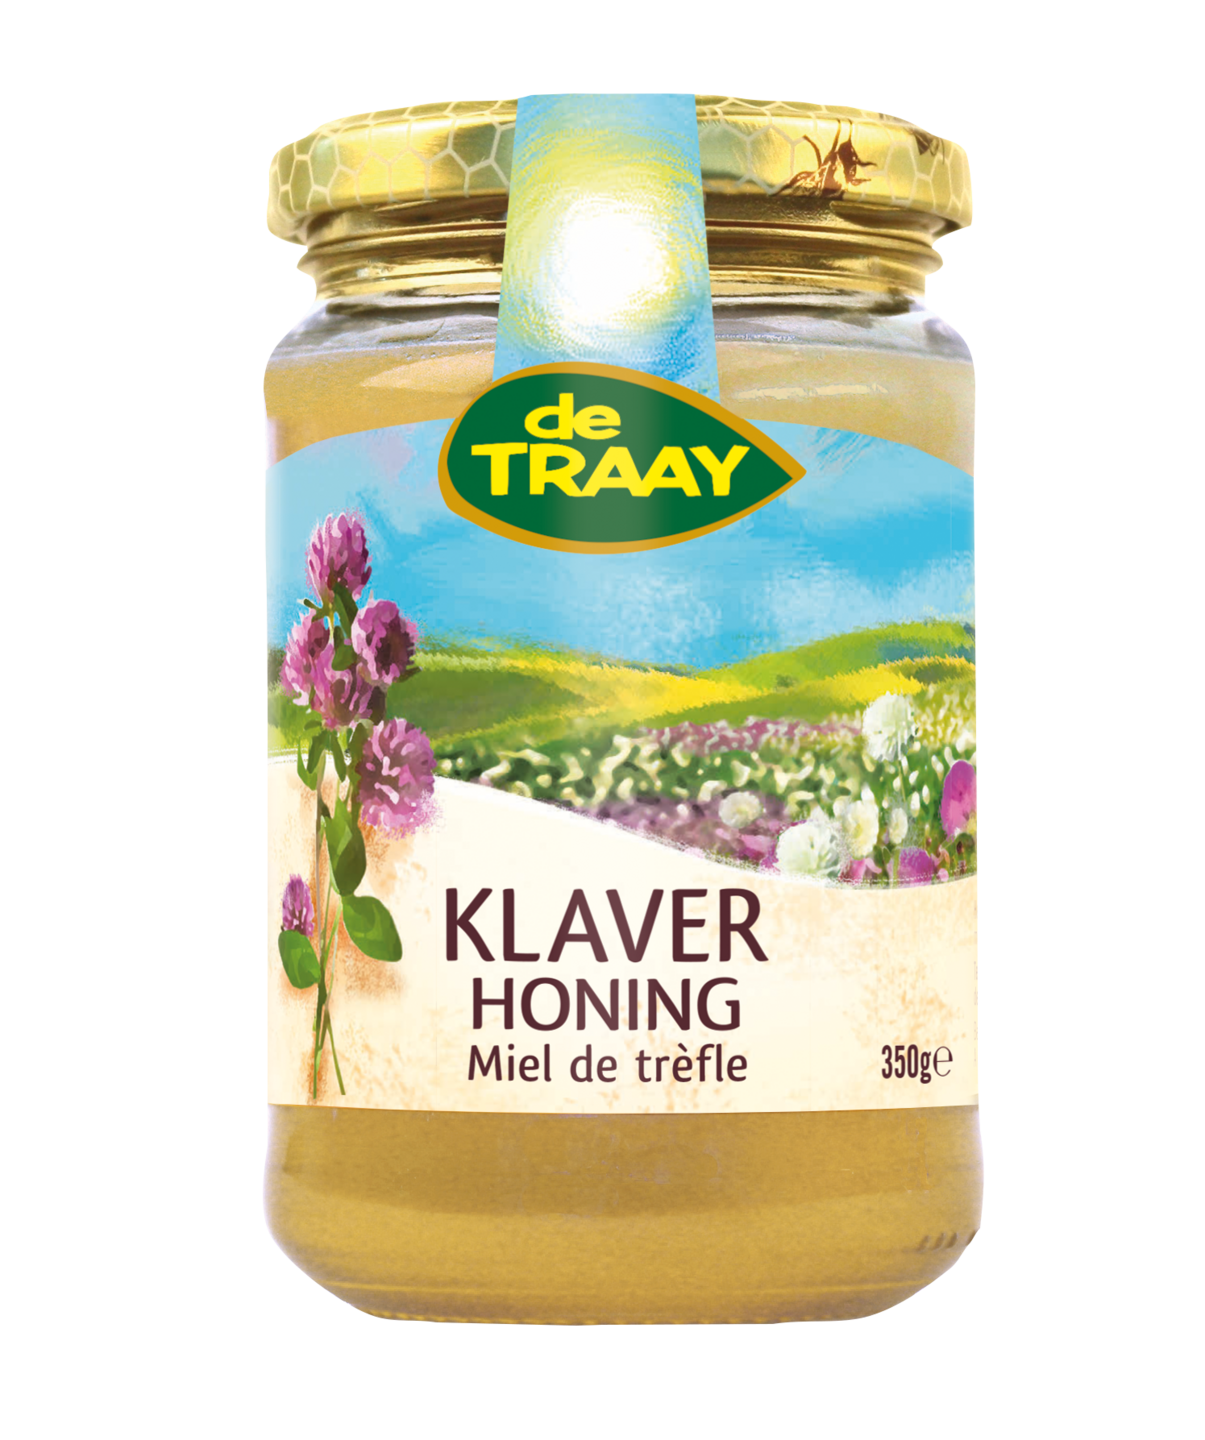 Clover Honey - 350 grams - De Traay